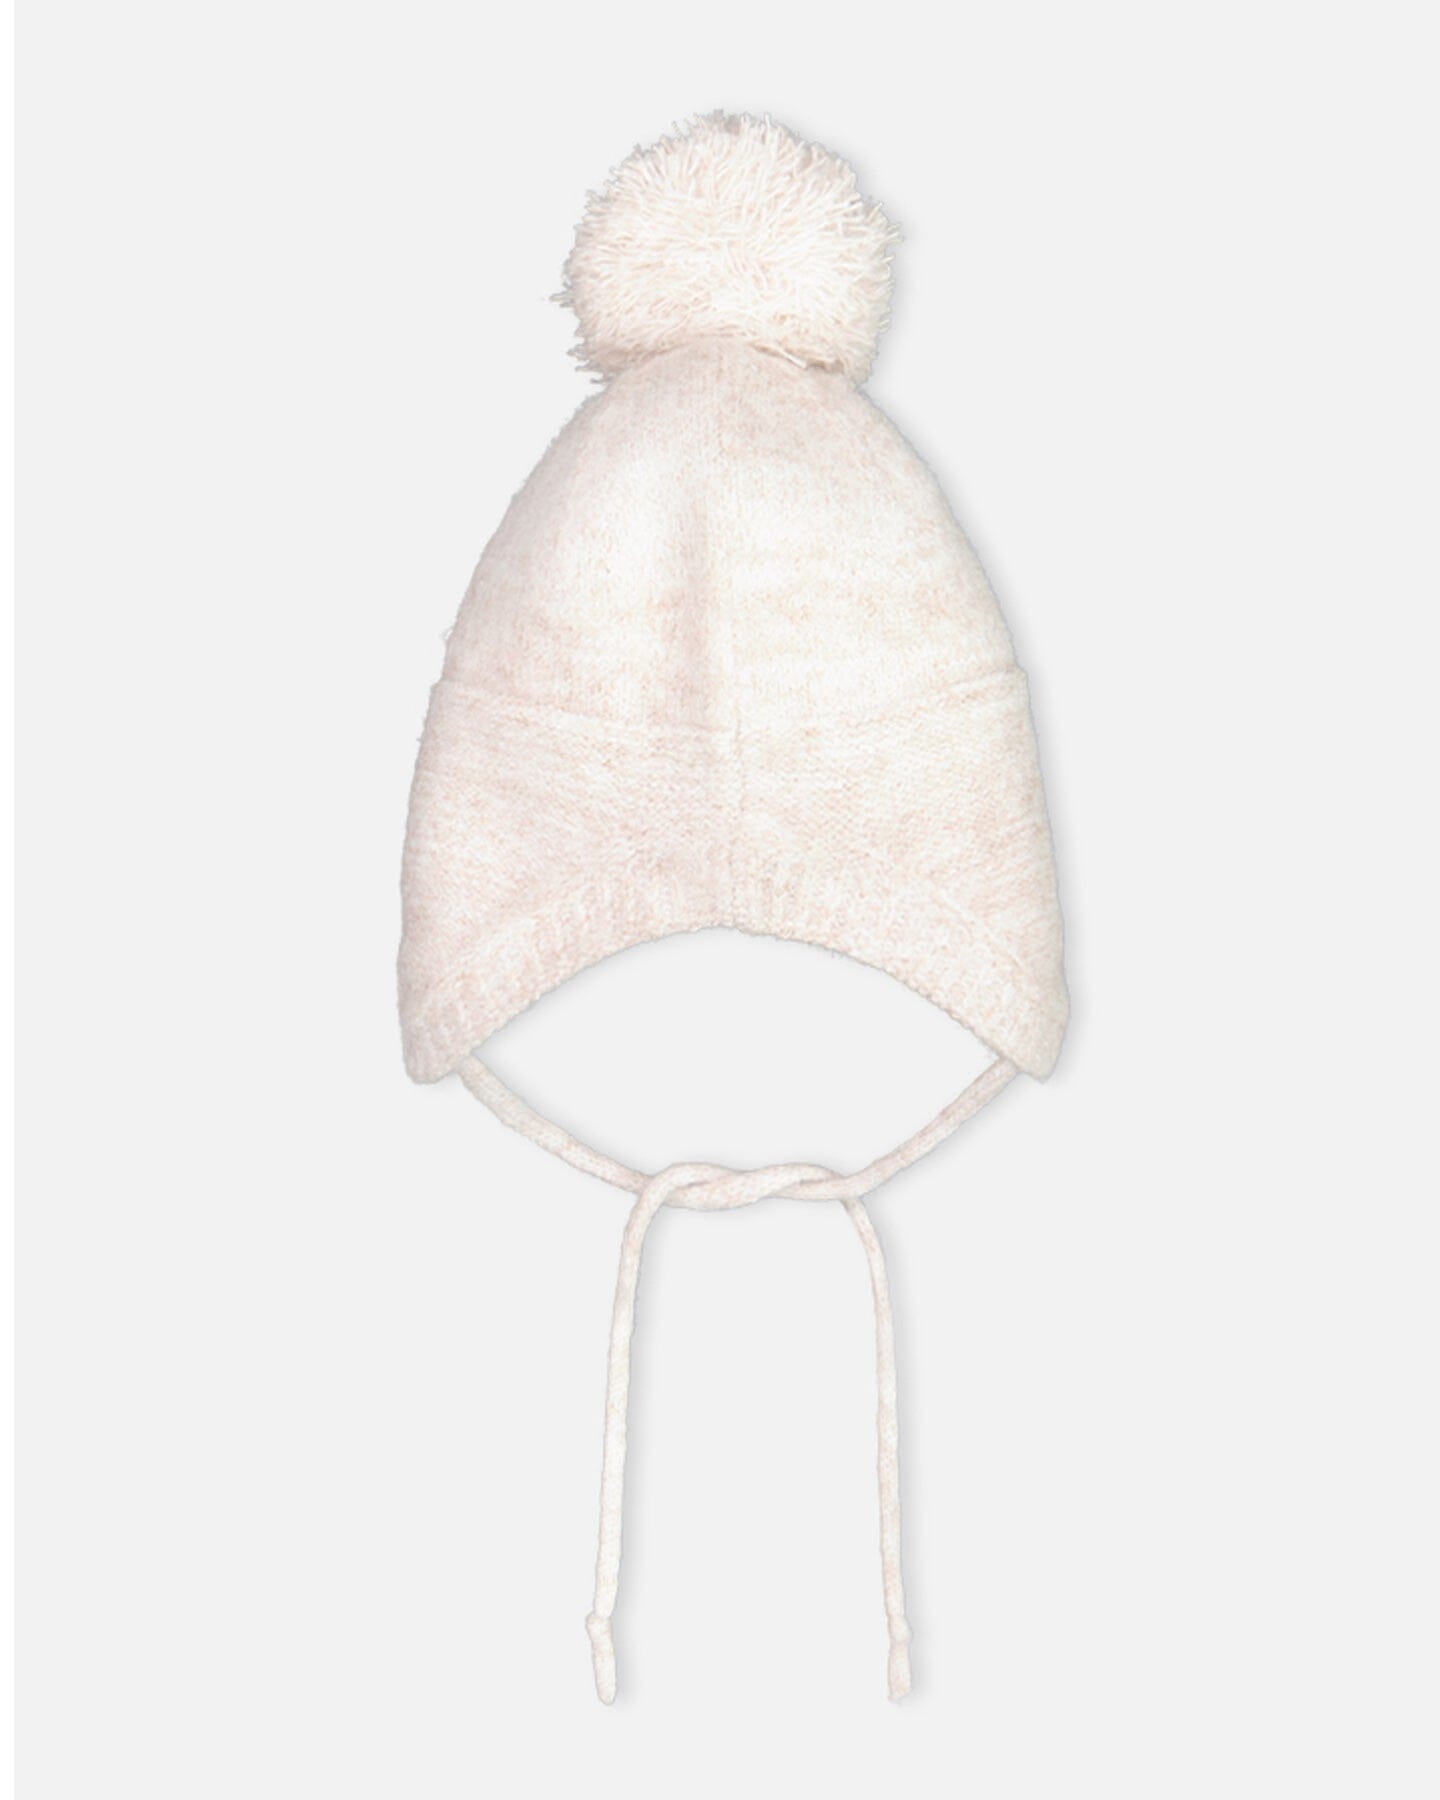 Peruvian Knit Hat In Champagne White For Baby Winter Accessories Deux par Deux 